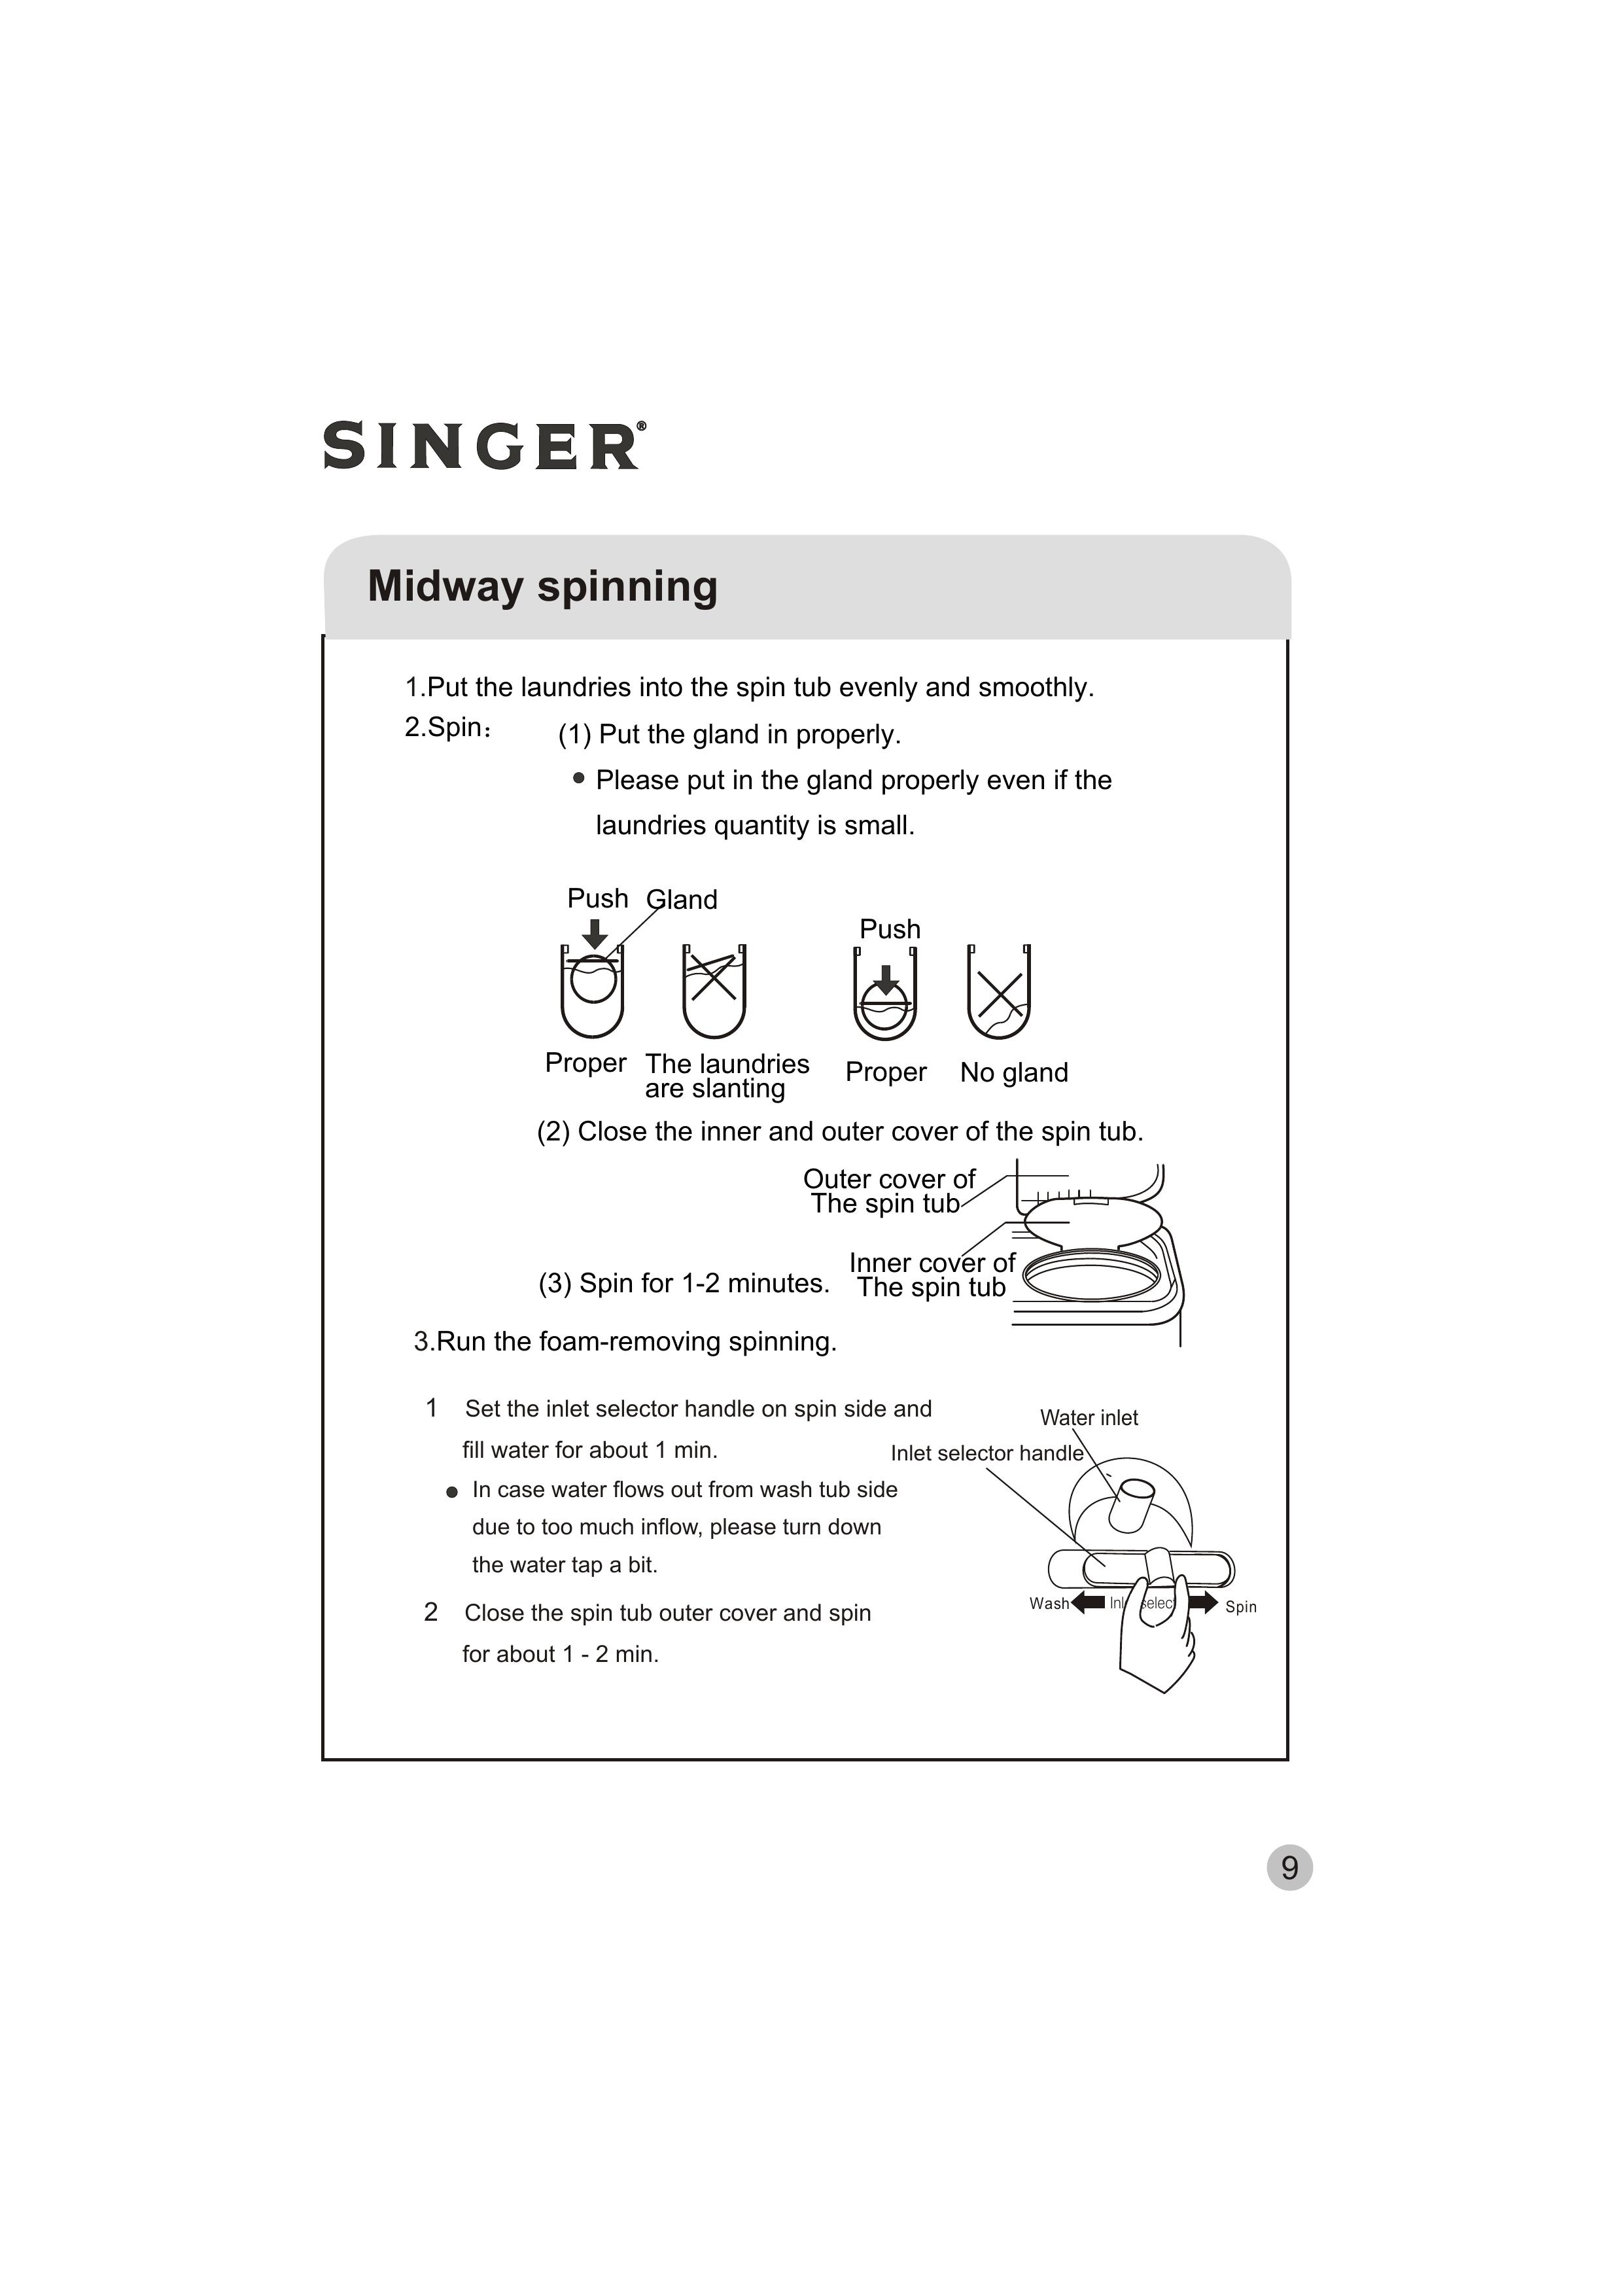 Singer WT5113 Washer/Dryer User Manual (Page 10)